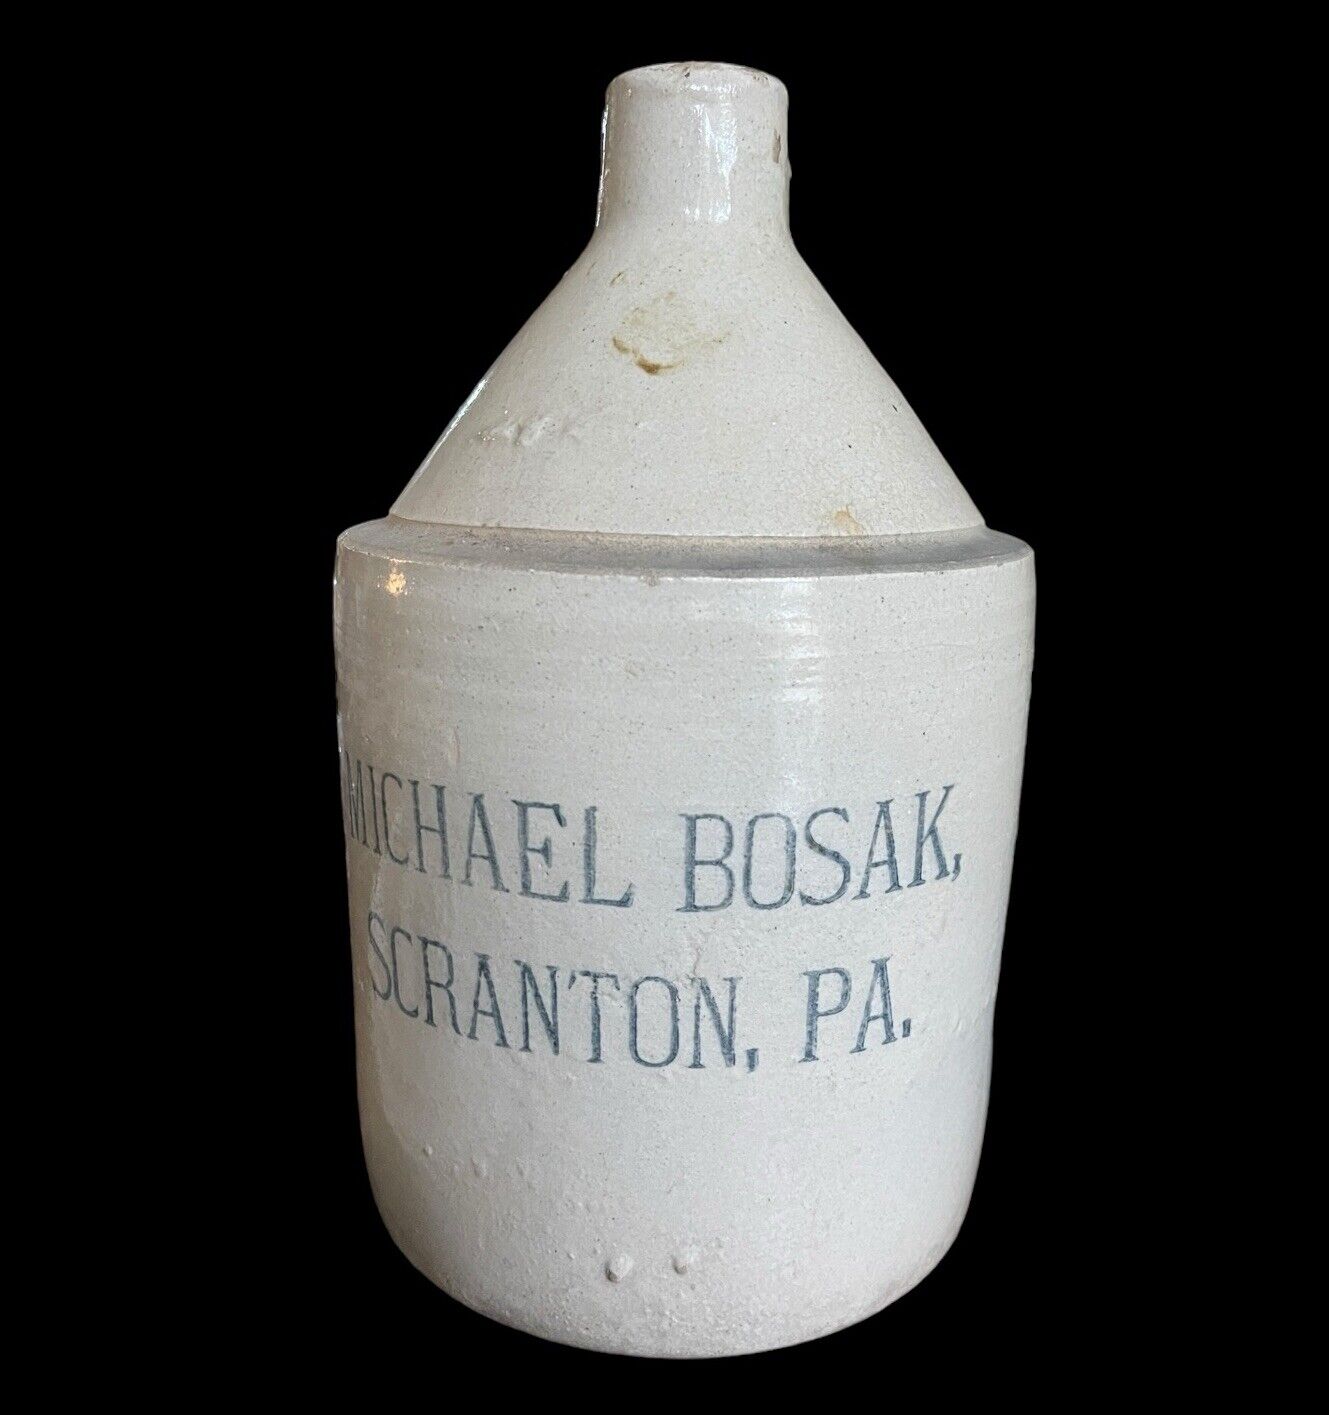 Antique Michael Bosak Stoneware Whiskey Jug Scranton PA 11.5 Inch One Gallon